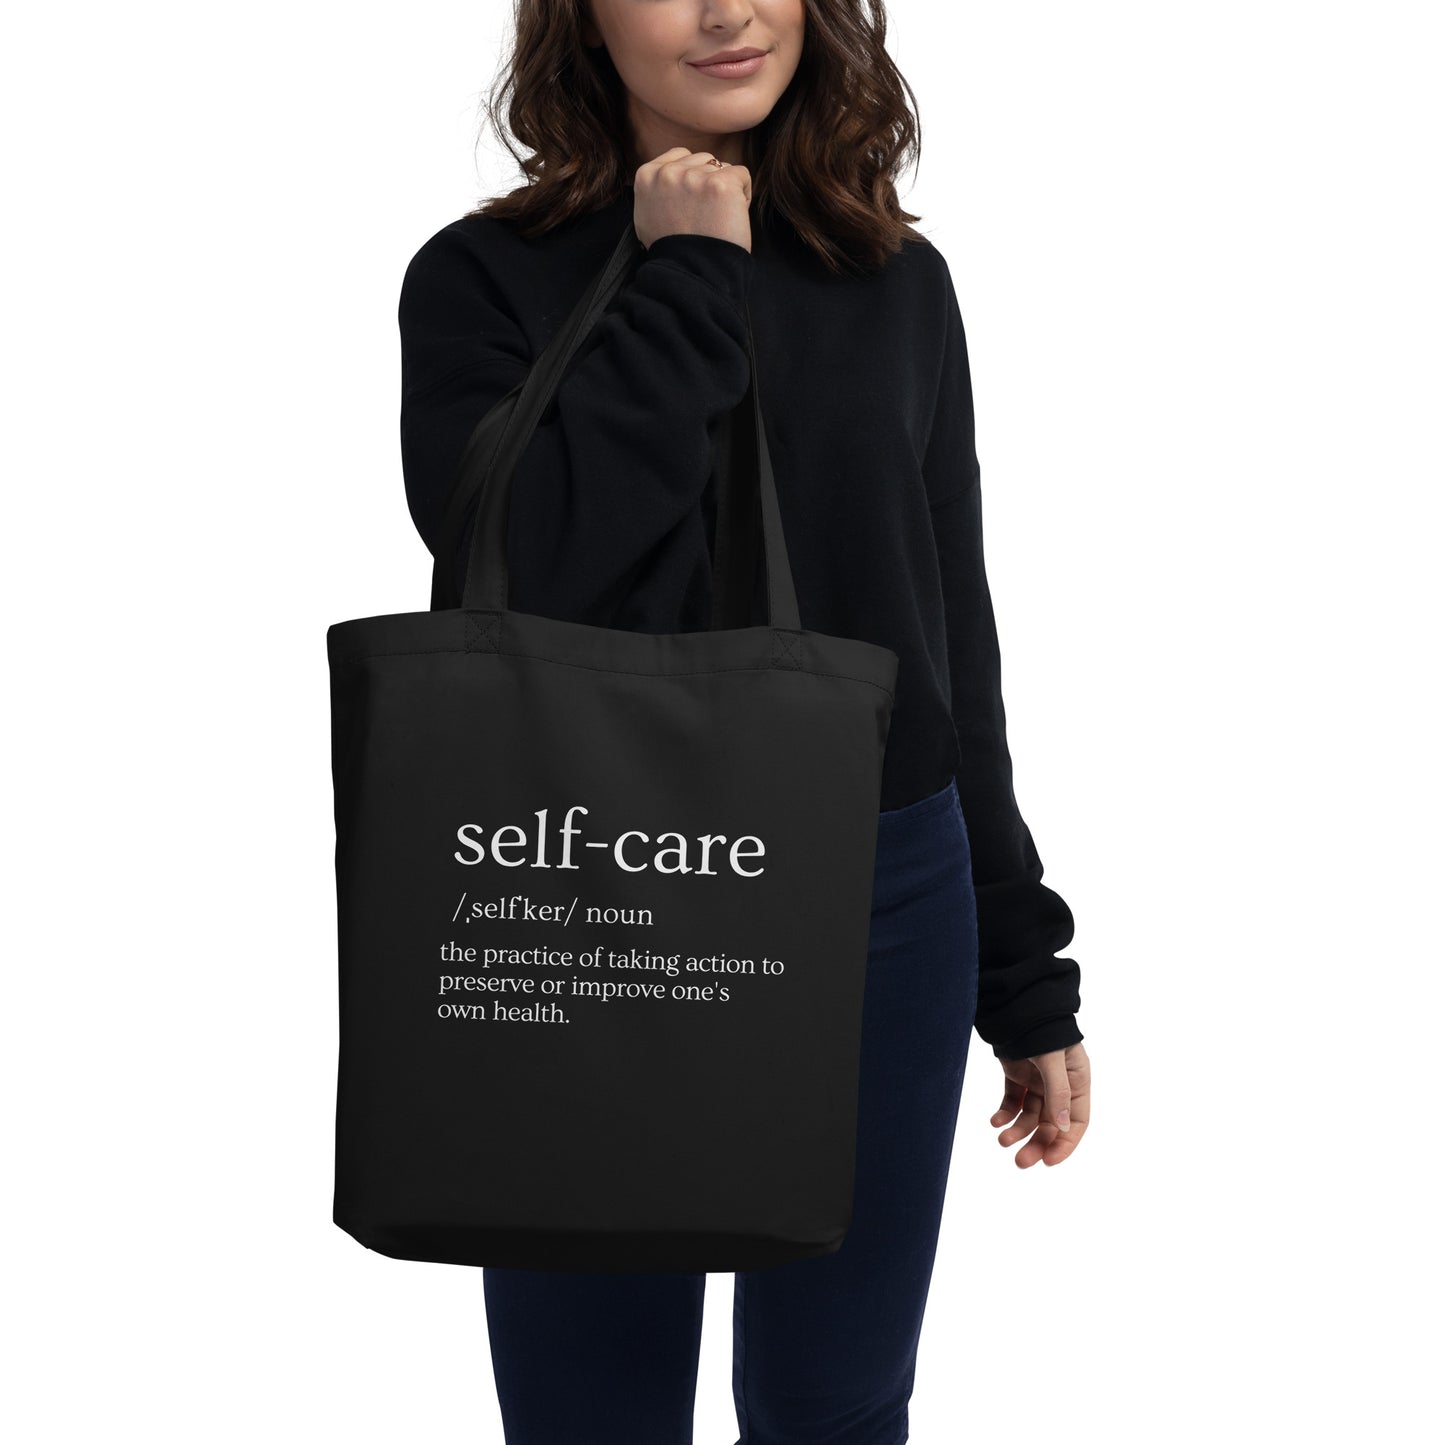 Self Care Eco Tote Bag